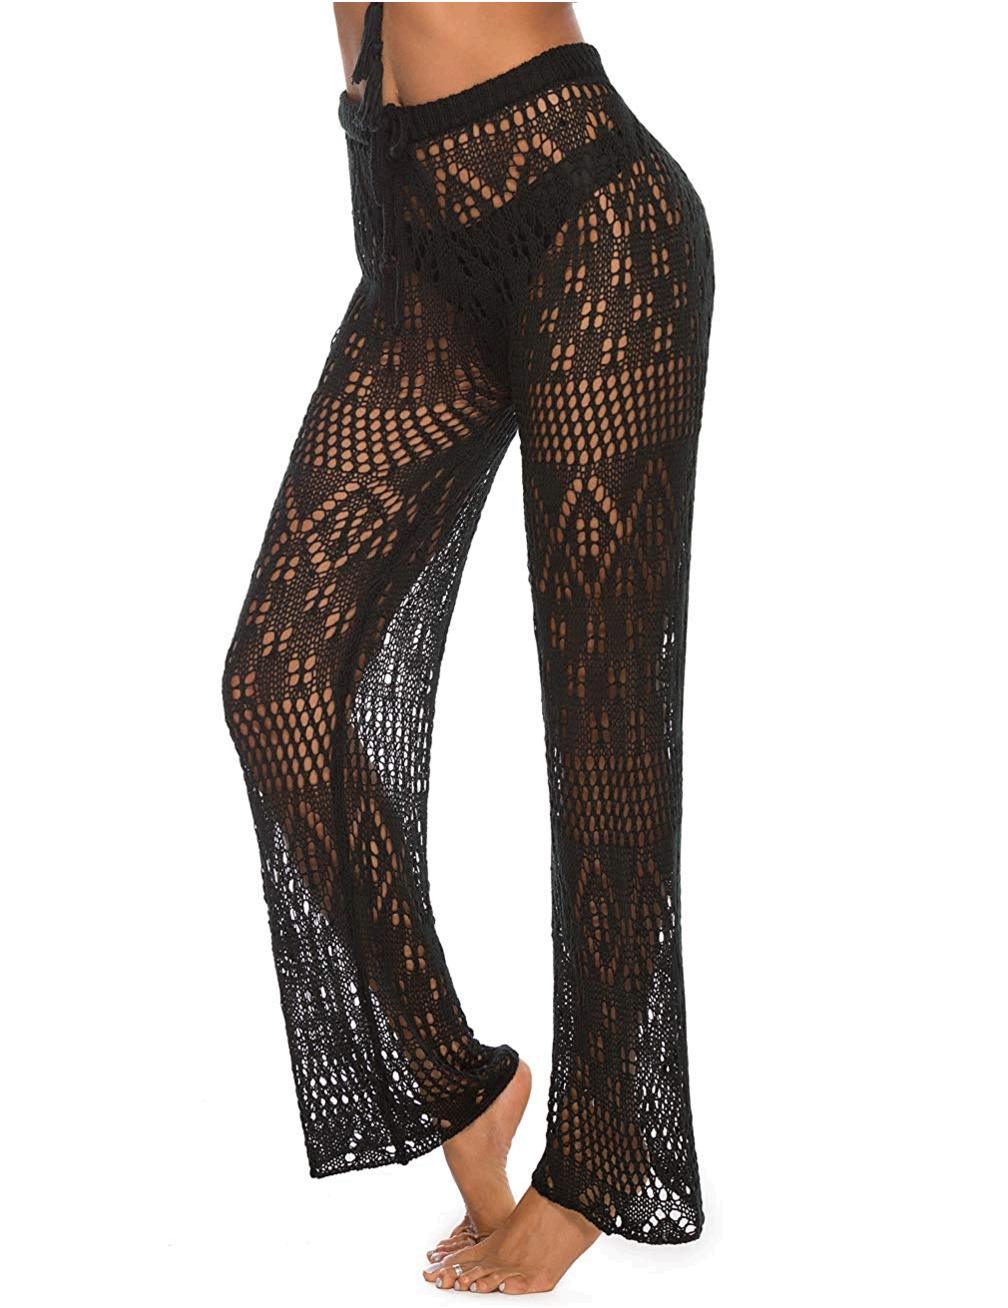 Womens Crochet Coverup Pants Sexy Black Mesh Beach Wear, Black 9, Size ...